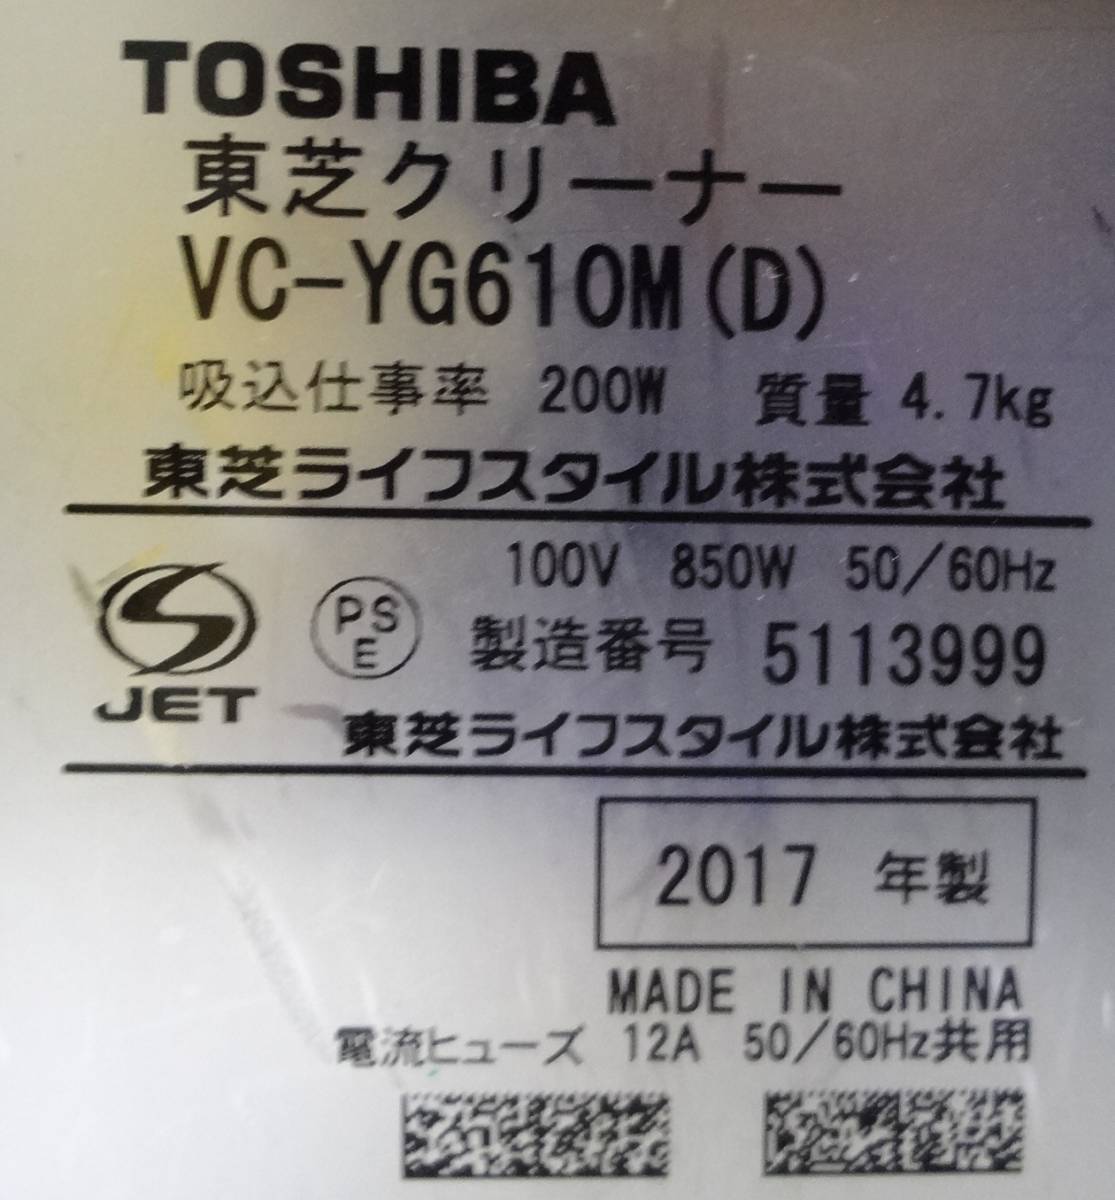 KI231214 東芝 TOSHIBA VC-YG610M(D) 掃除機 トルネオ TORNEO サイクロンクリーナー 中古品_画像3